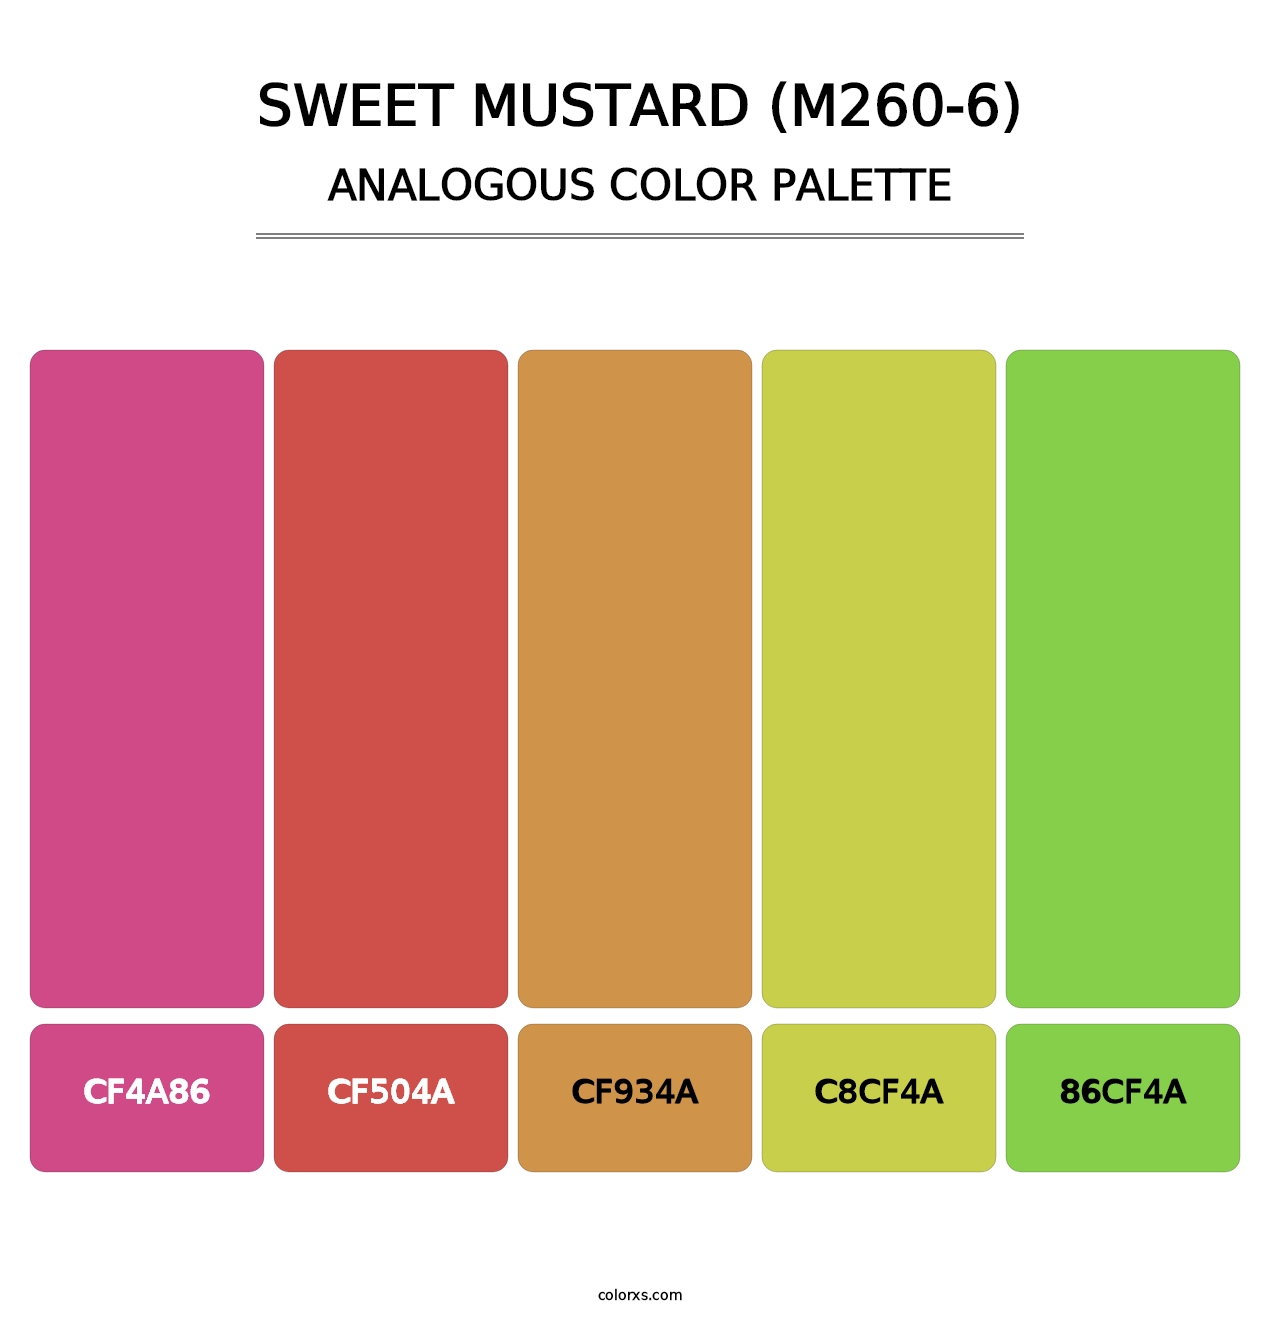 Sweet Mustard (M260-6) - Analogous Color Palette